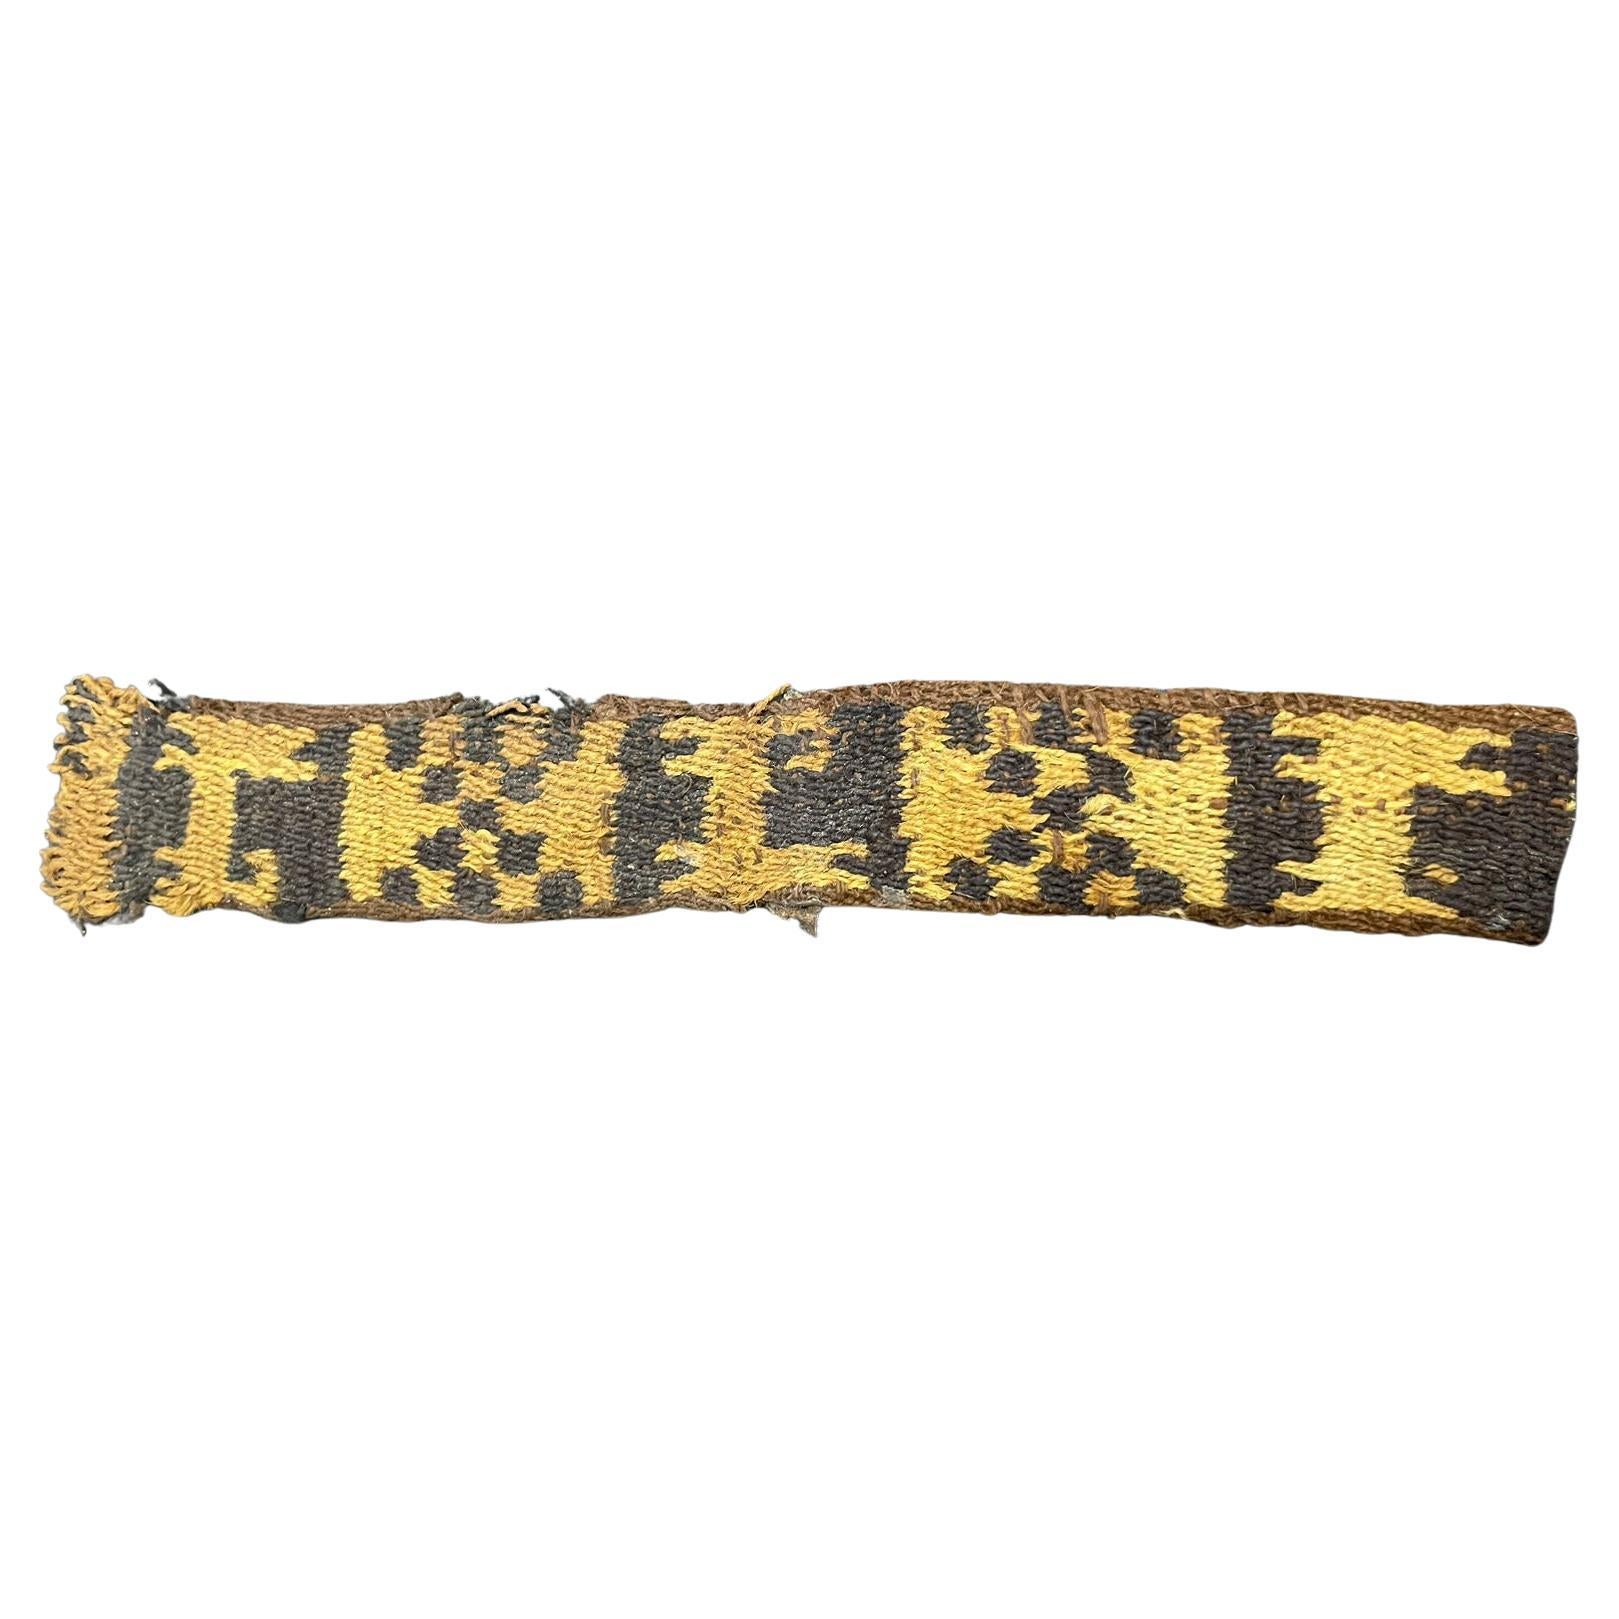  Pre-Columbian  Inka Textile Fragment - Peru, Ex Ferdinand Anton For Sale